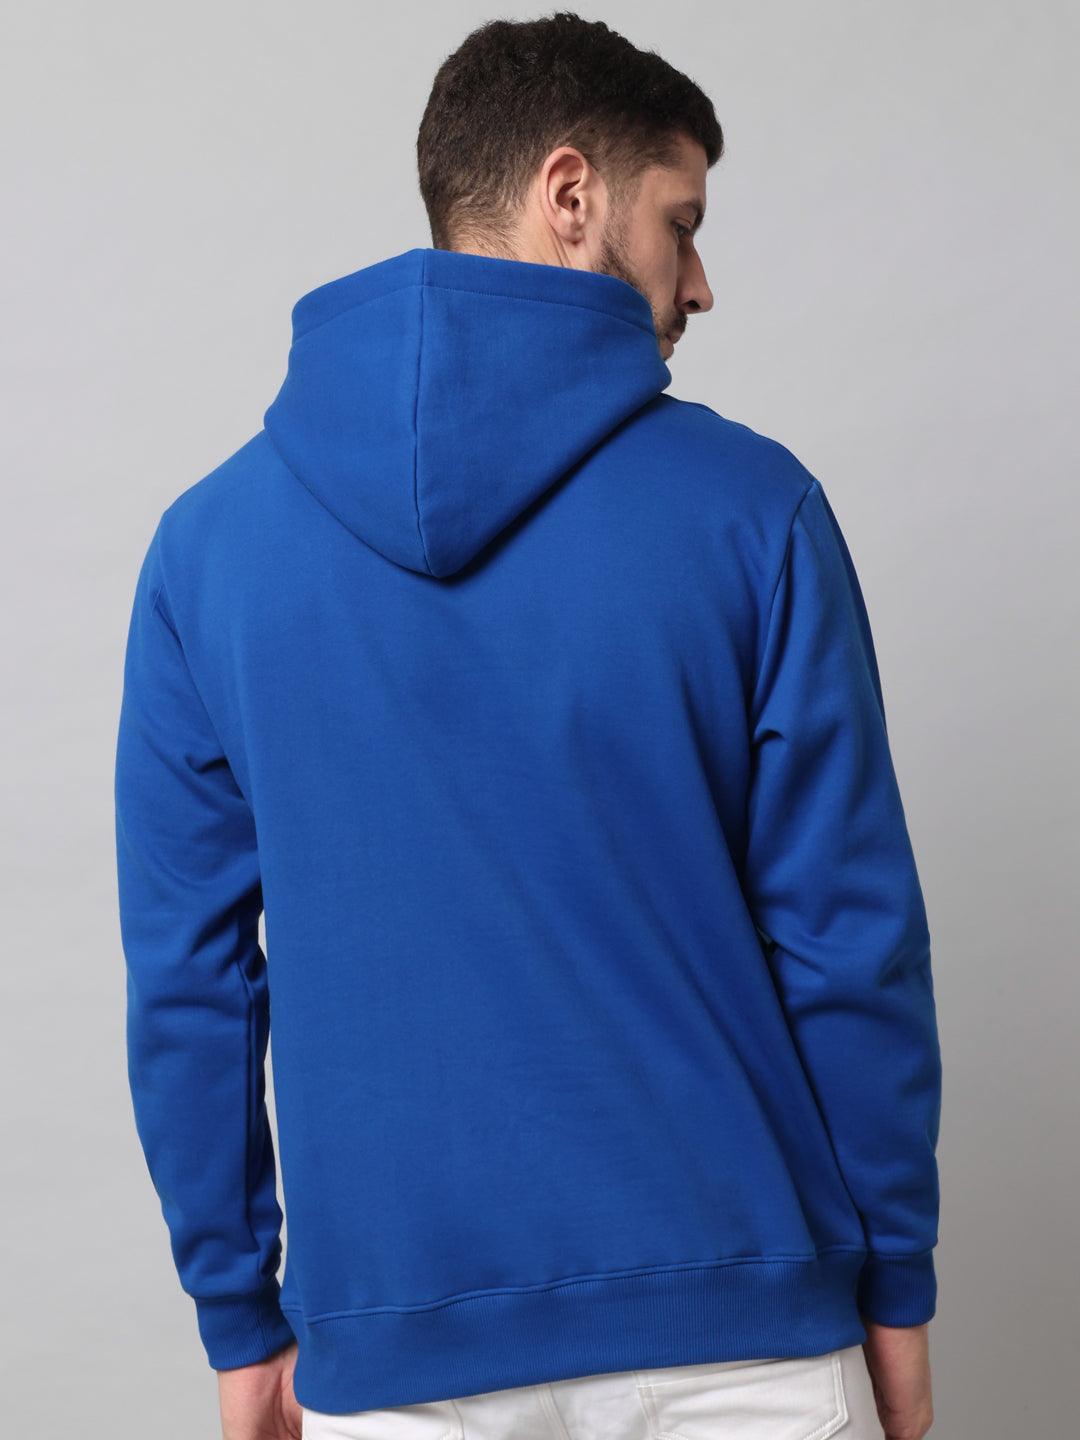 Griffel Men's Royal Cotton Front Logo Fleece Hoody Sweatshirt with Full Sleeve - griffel